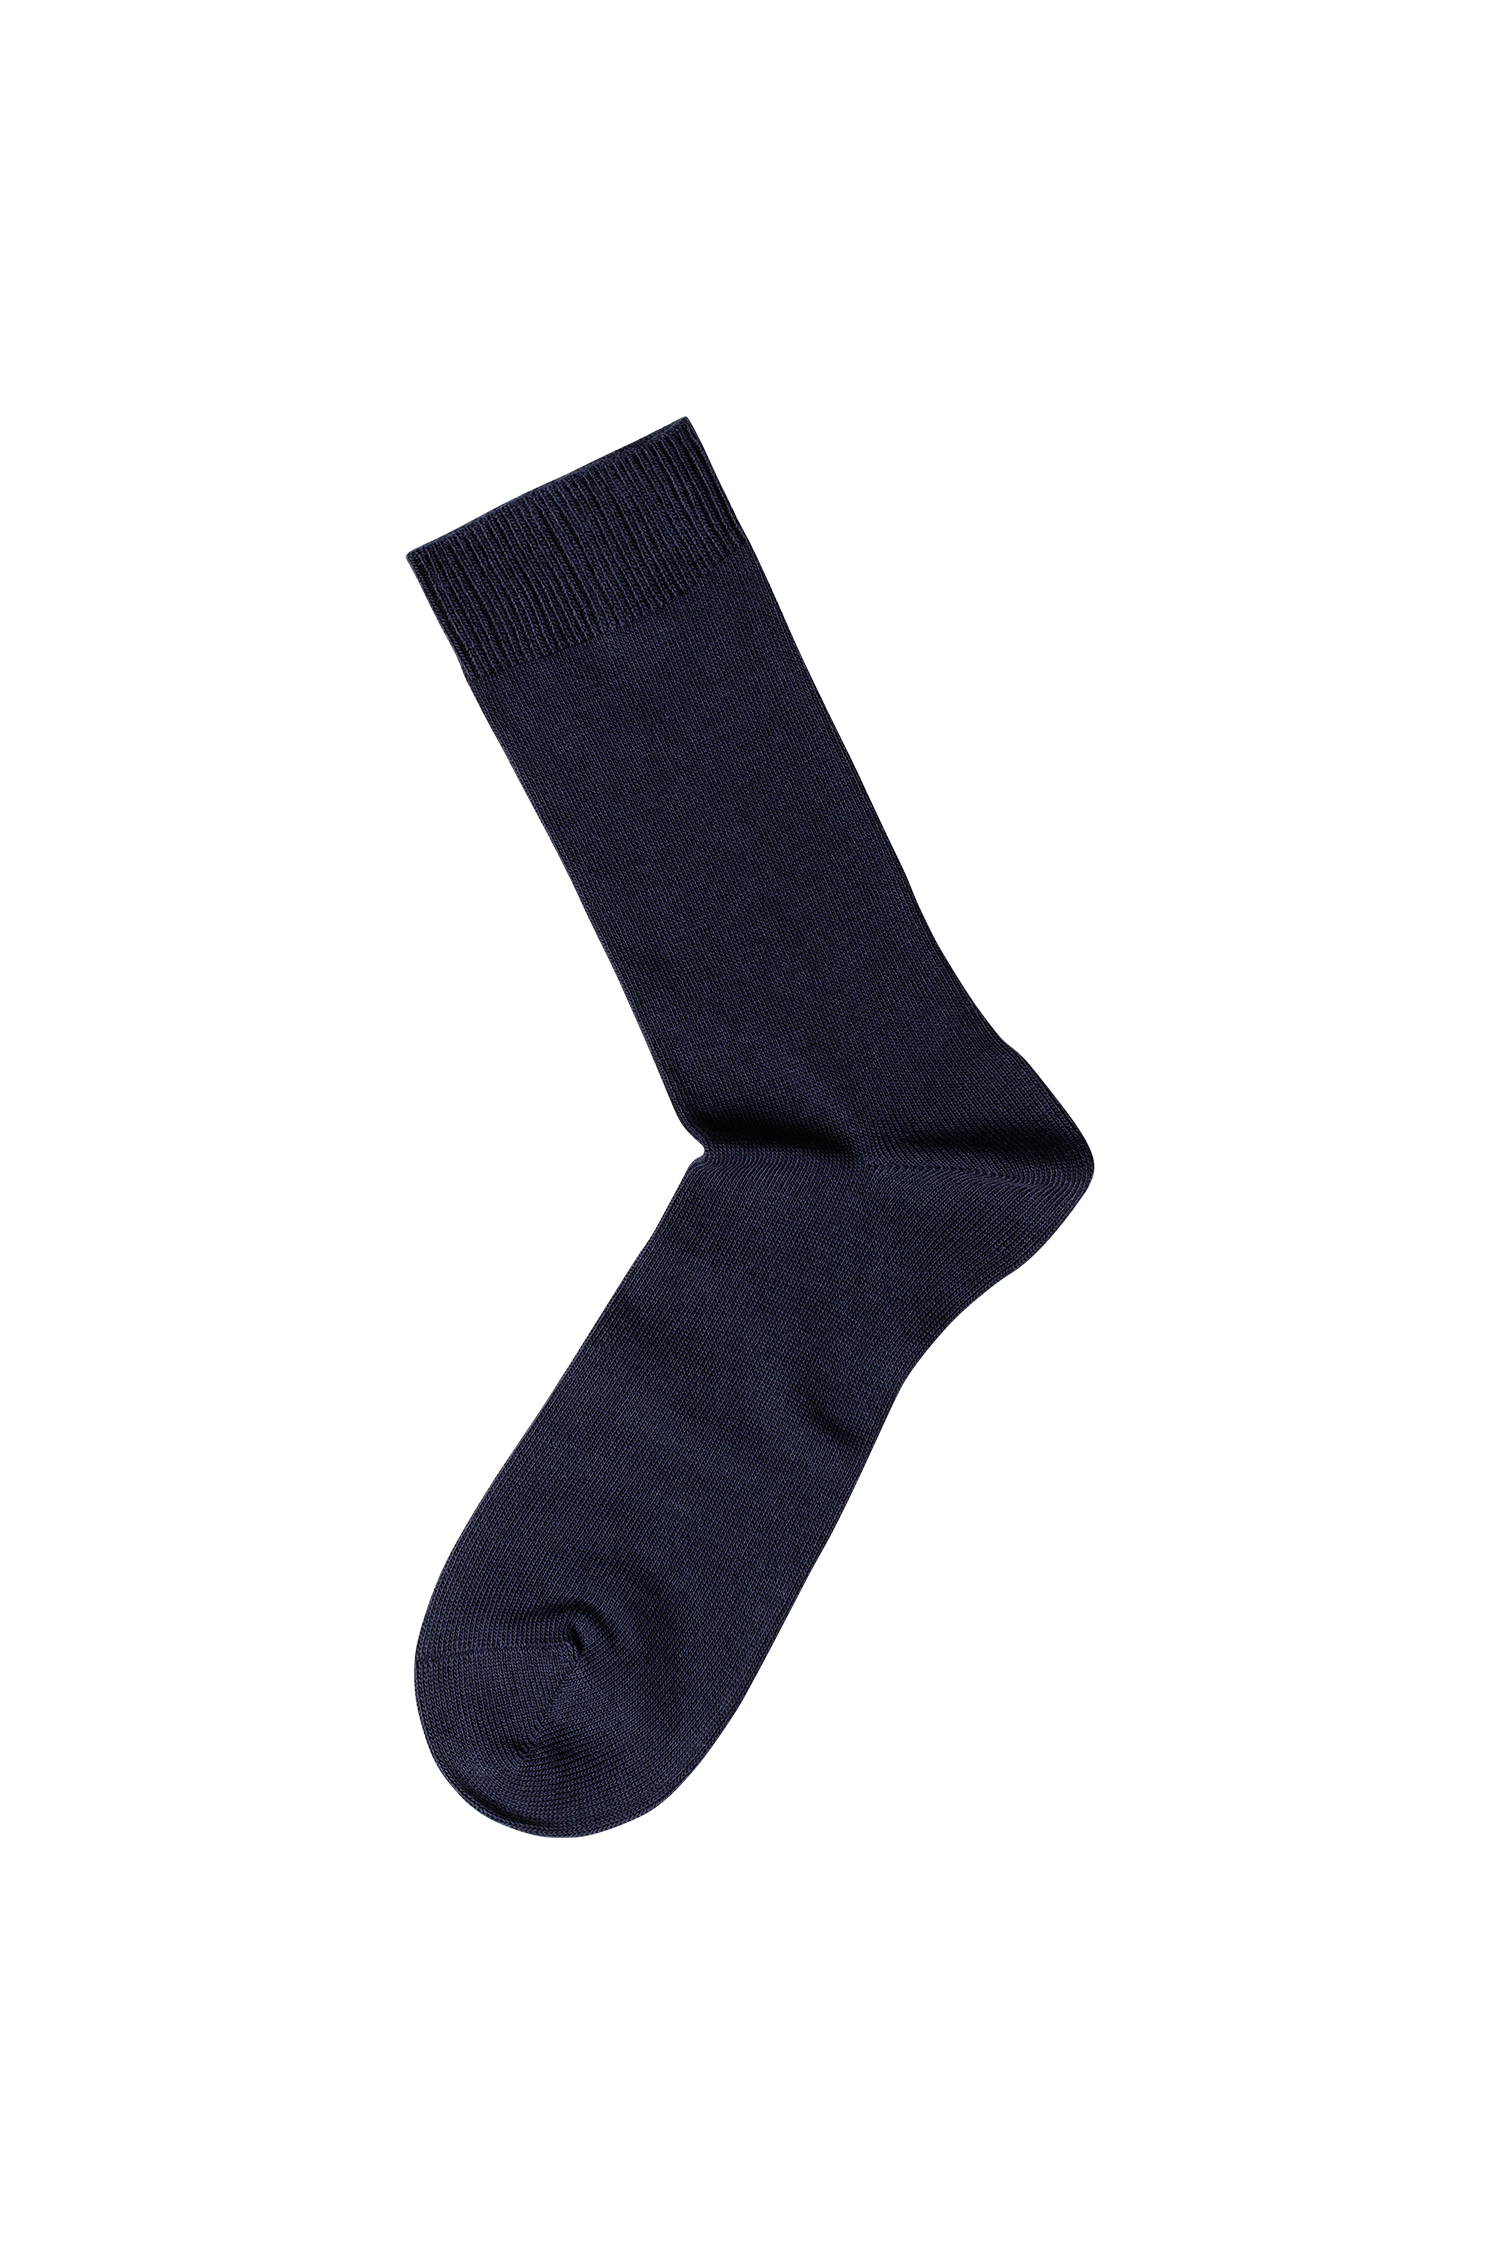 Organic Plain Cotton Socks Navy 39/42